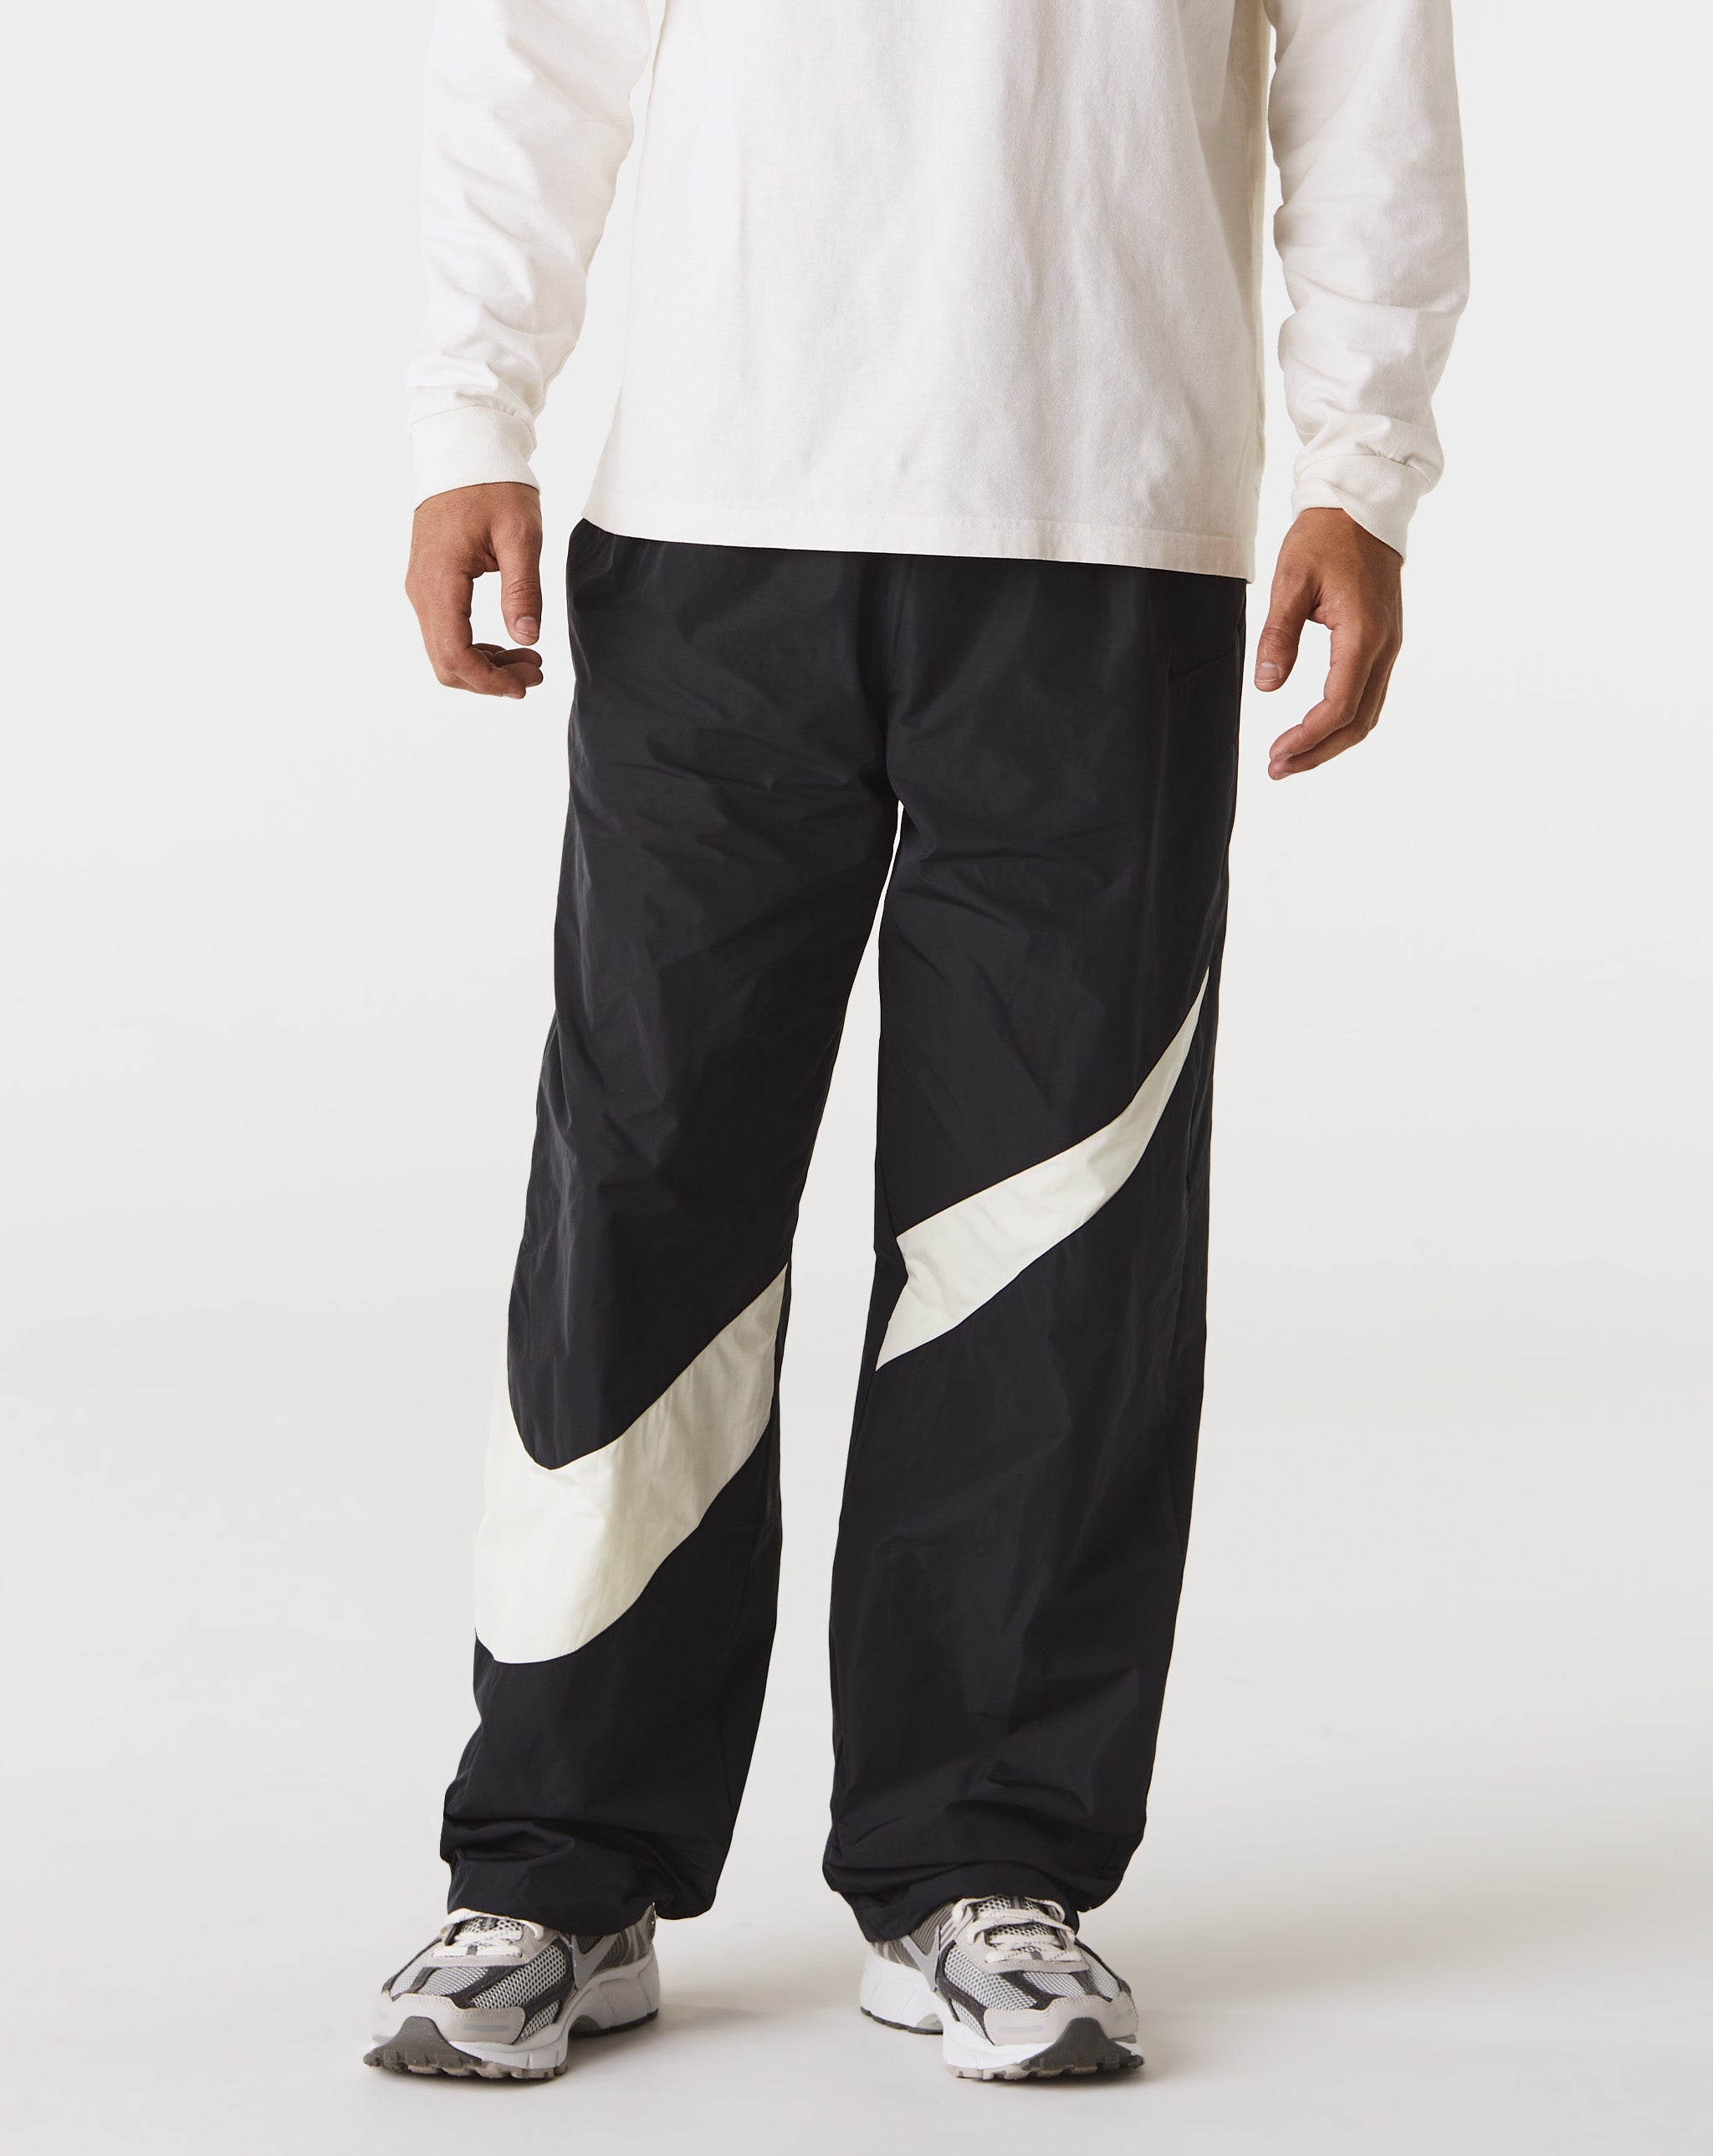 Nike daniela gregis metallic silk smock dress item  - Cheap Urlfreeze Jordan outlet